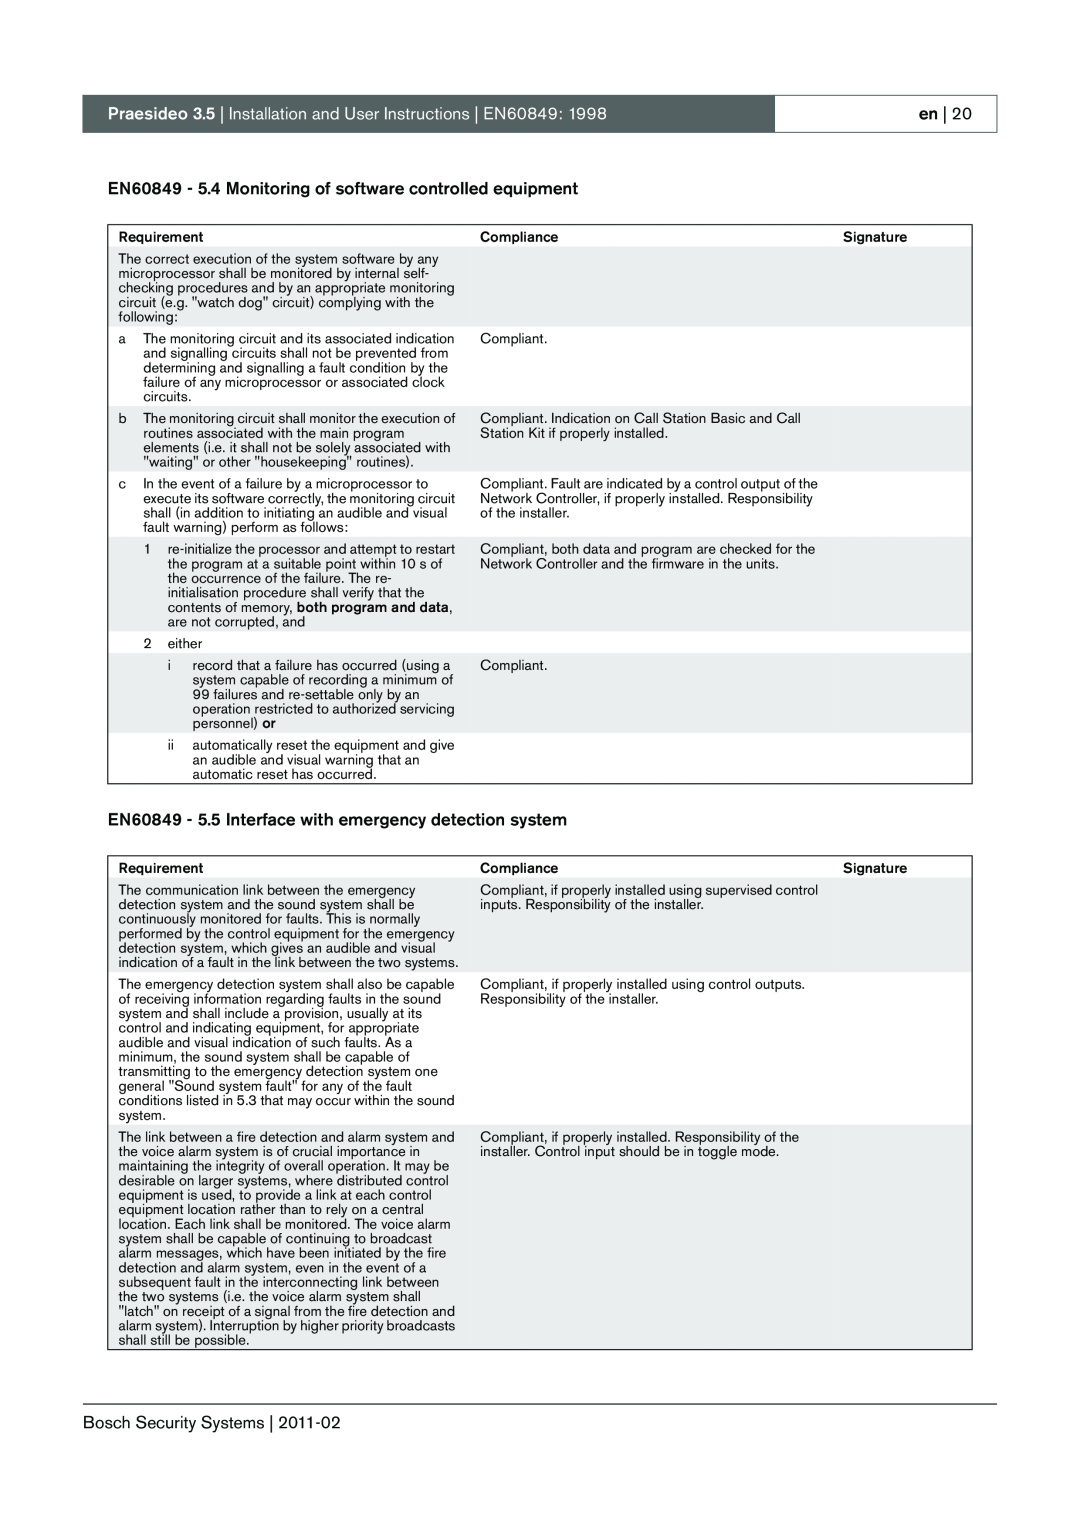 Bosch Appliances 3.5 manual en, Bosch Security Systems 